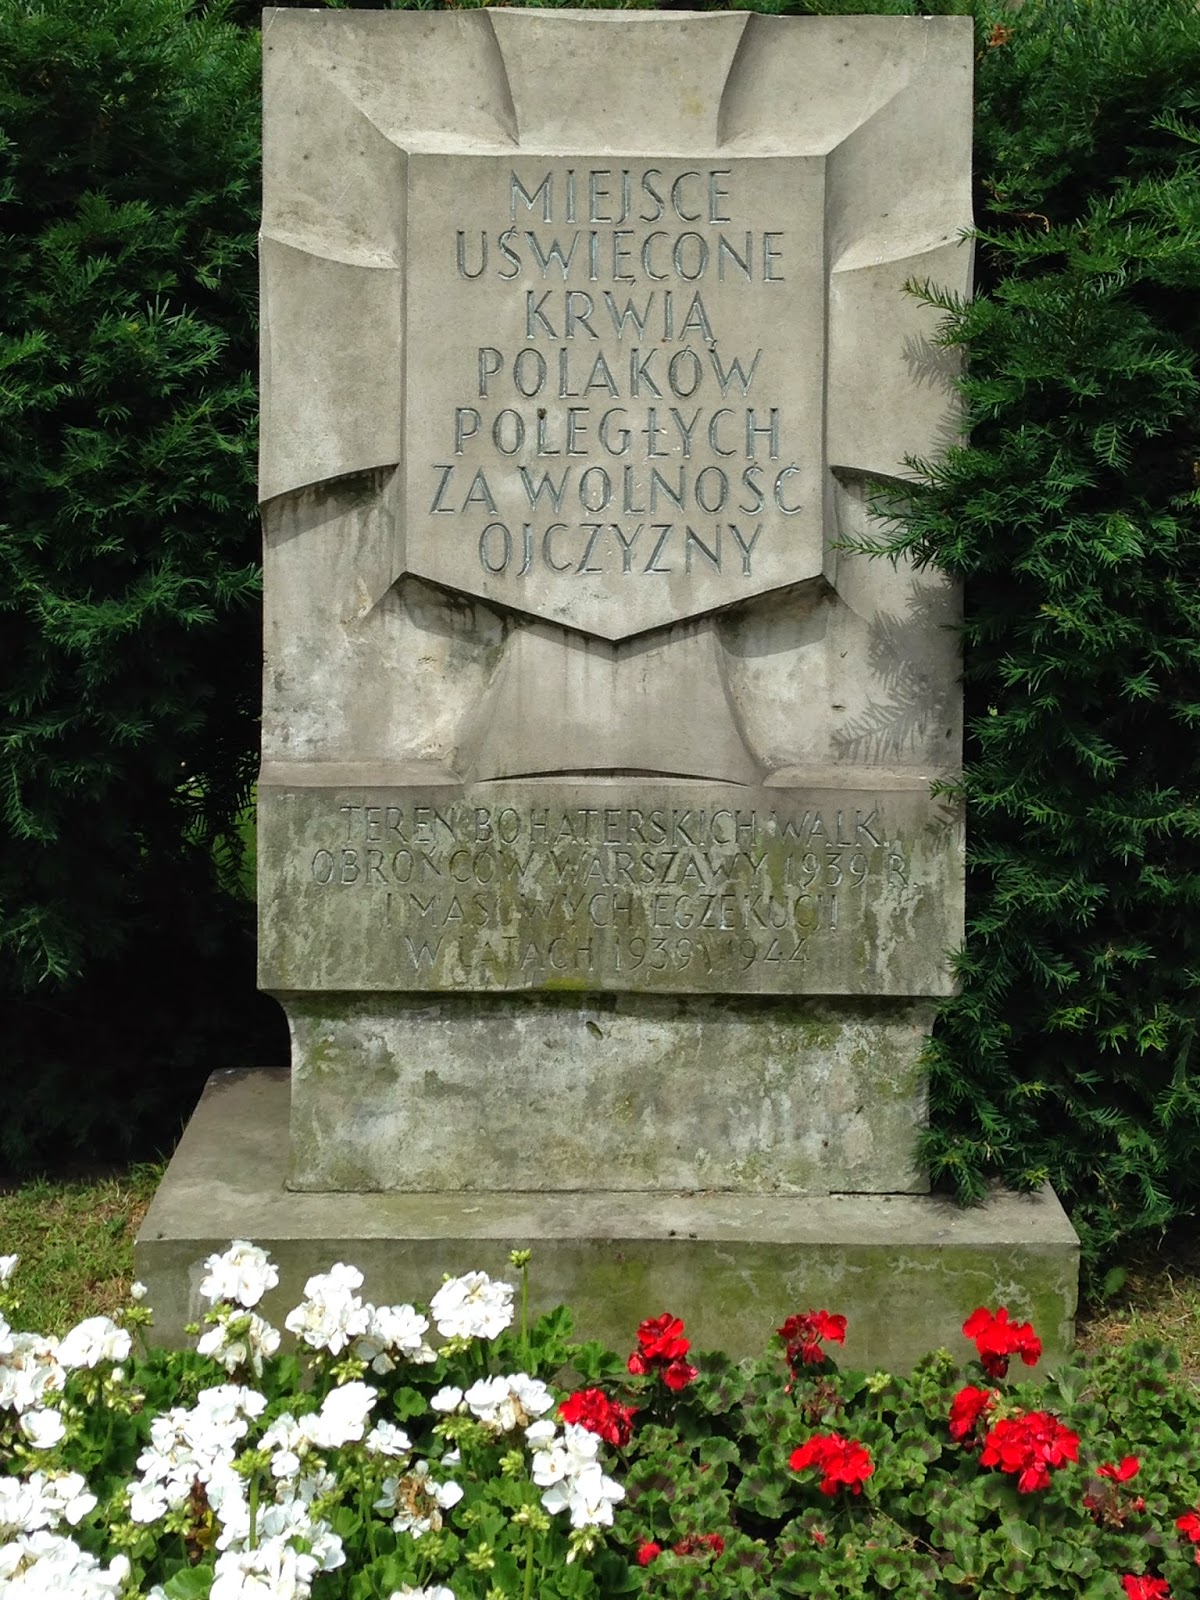 Historical marker of a Nazi massacre of civilian Poles, by Maja Trochimczyk